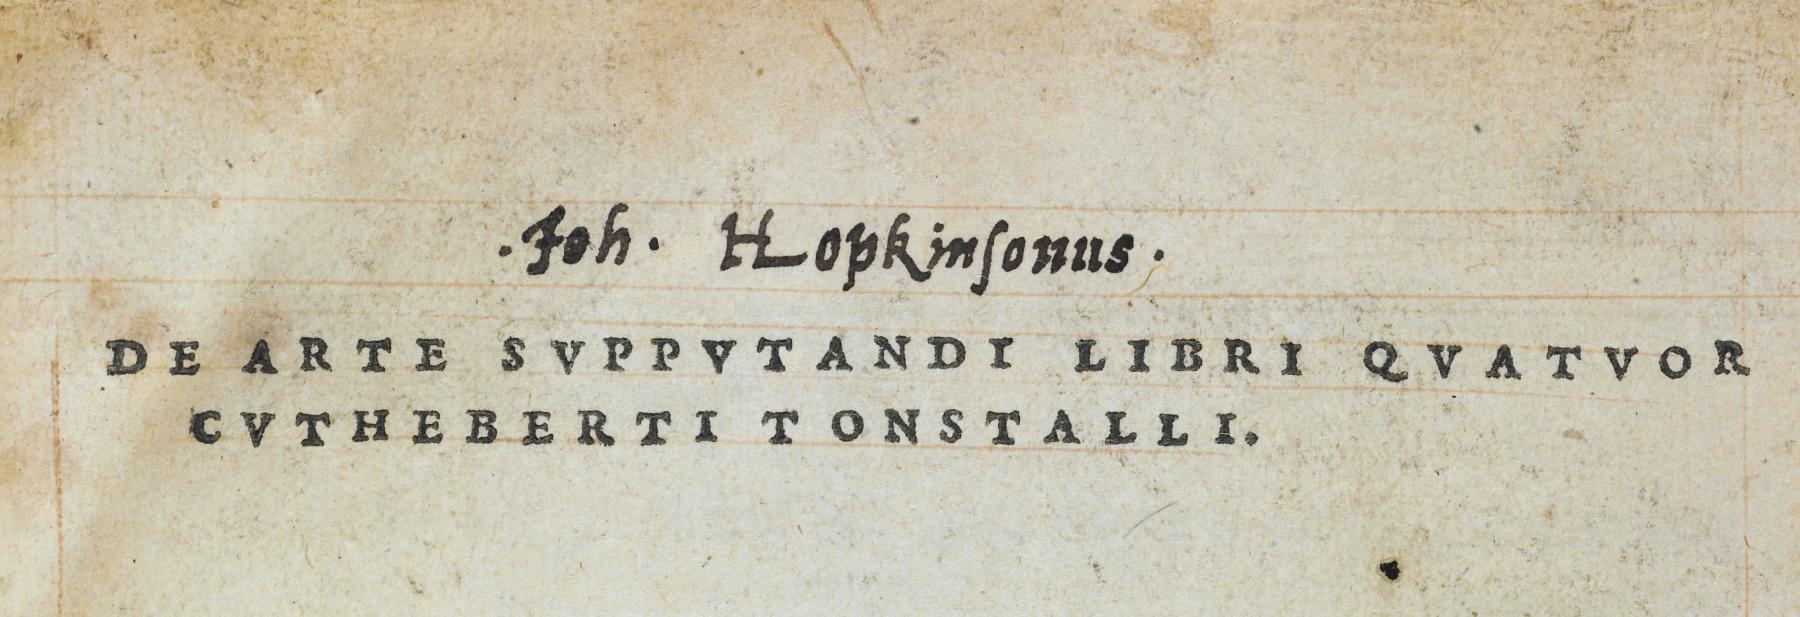 Image for De arte supputandi libri quatuor Cuthberti Tonstalli.